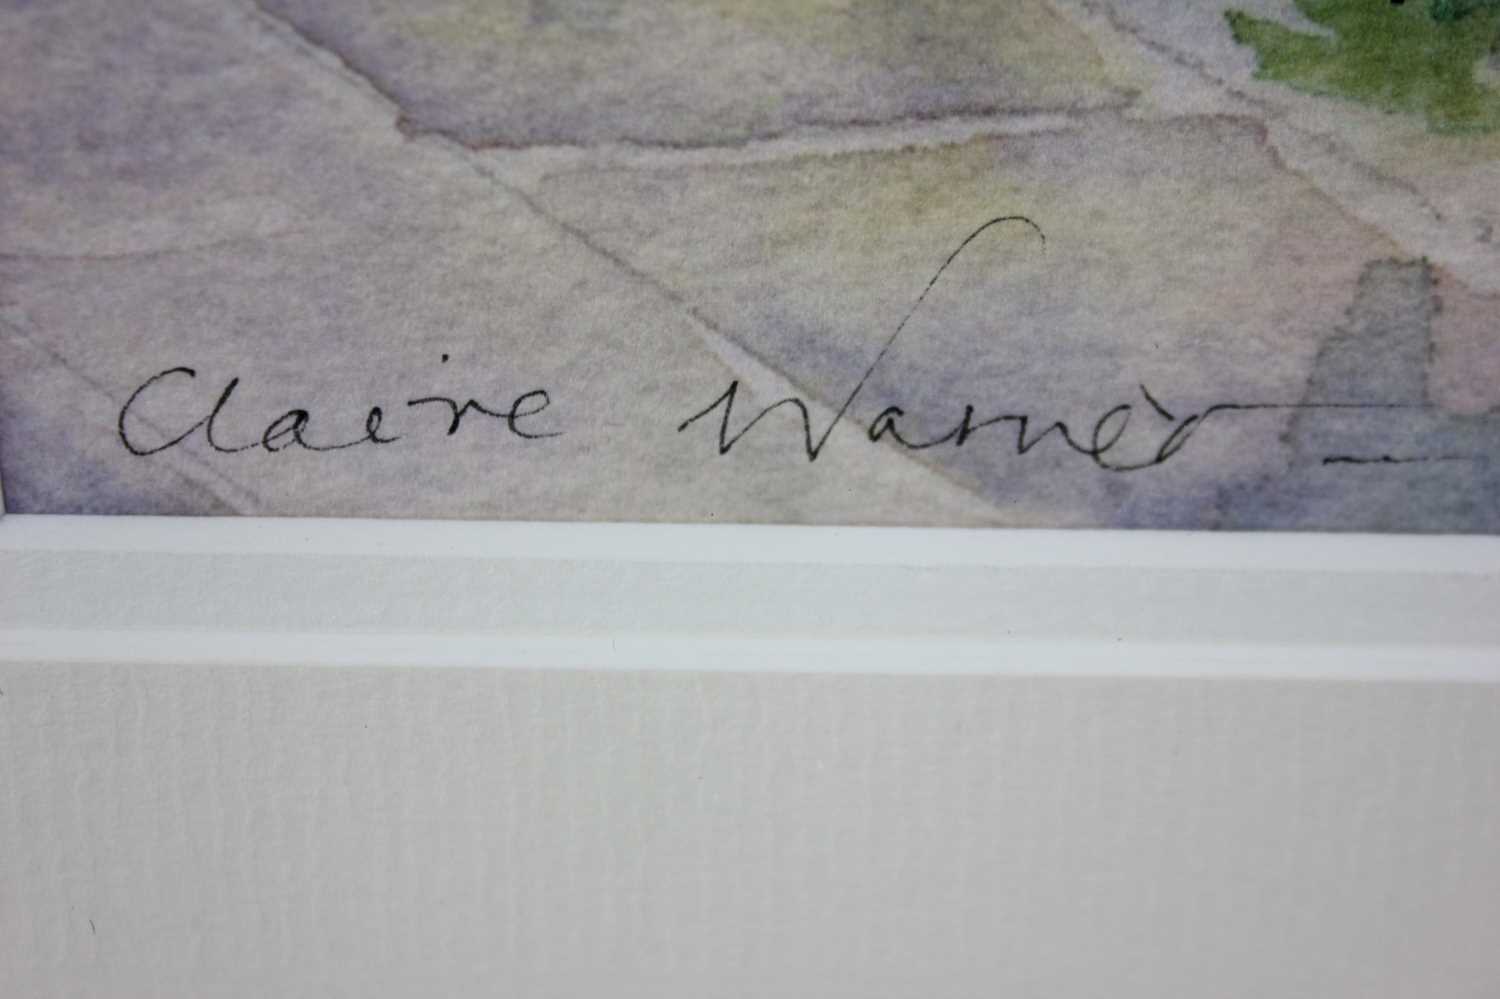 Claire Warner (20th century British) rainy promenade, watercolour, signed in pencil, 32cm by 22cm - Image 2 of 2